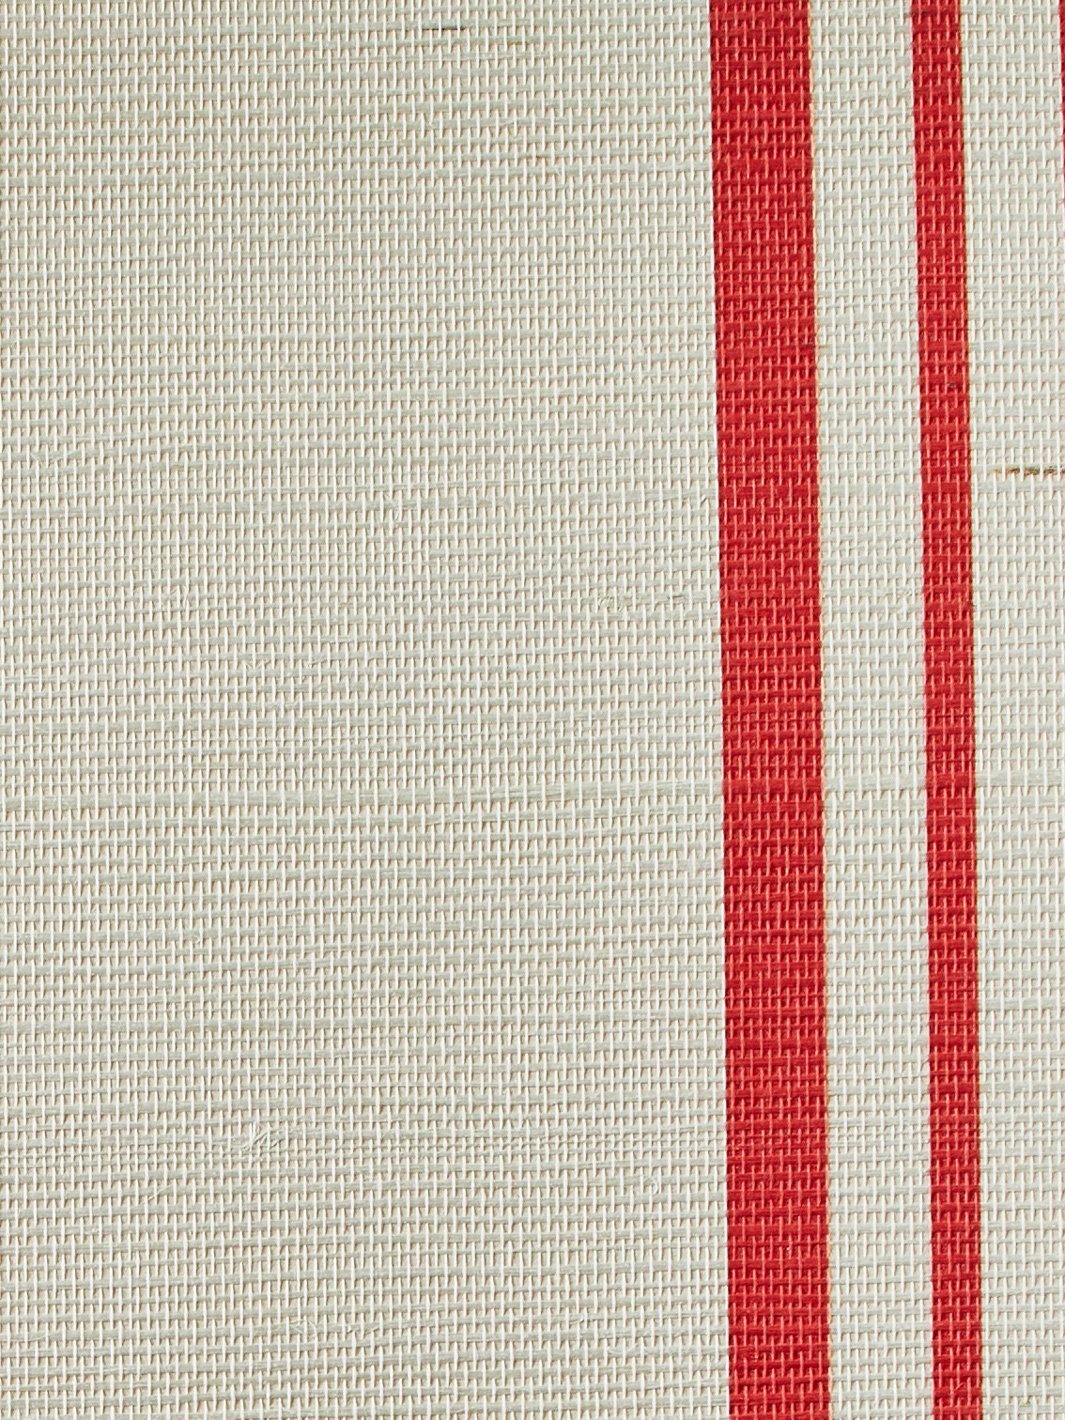 'Yorkshire Stripe' Grasscloth' Wallpaper by Wallshoppe - Red